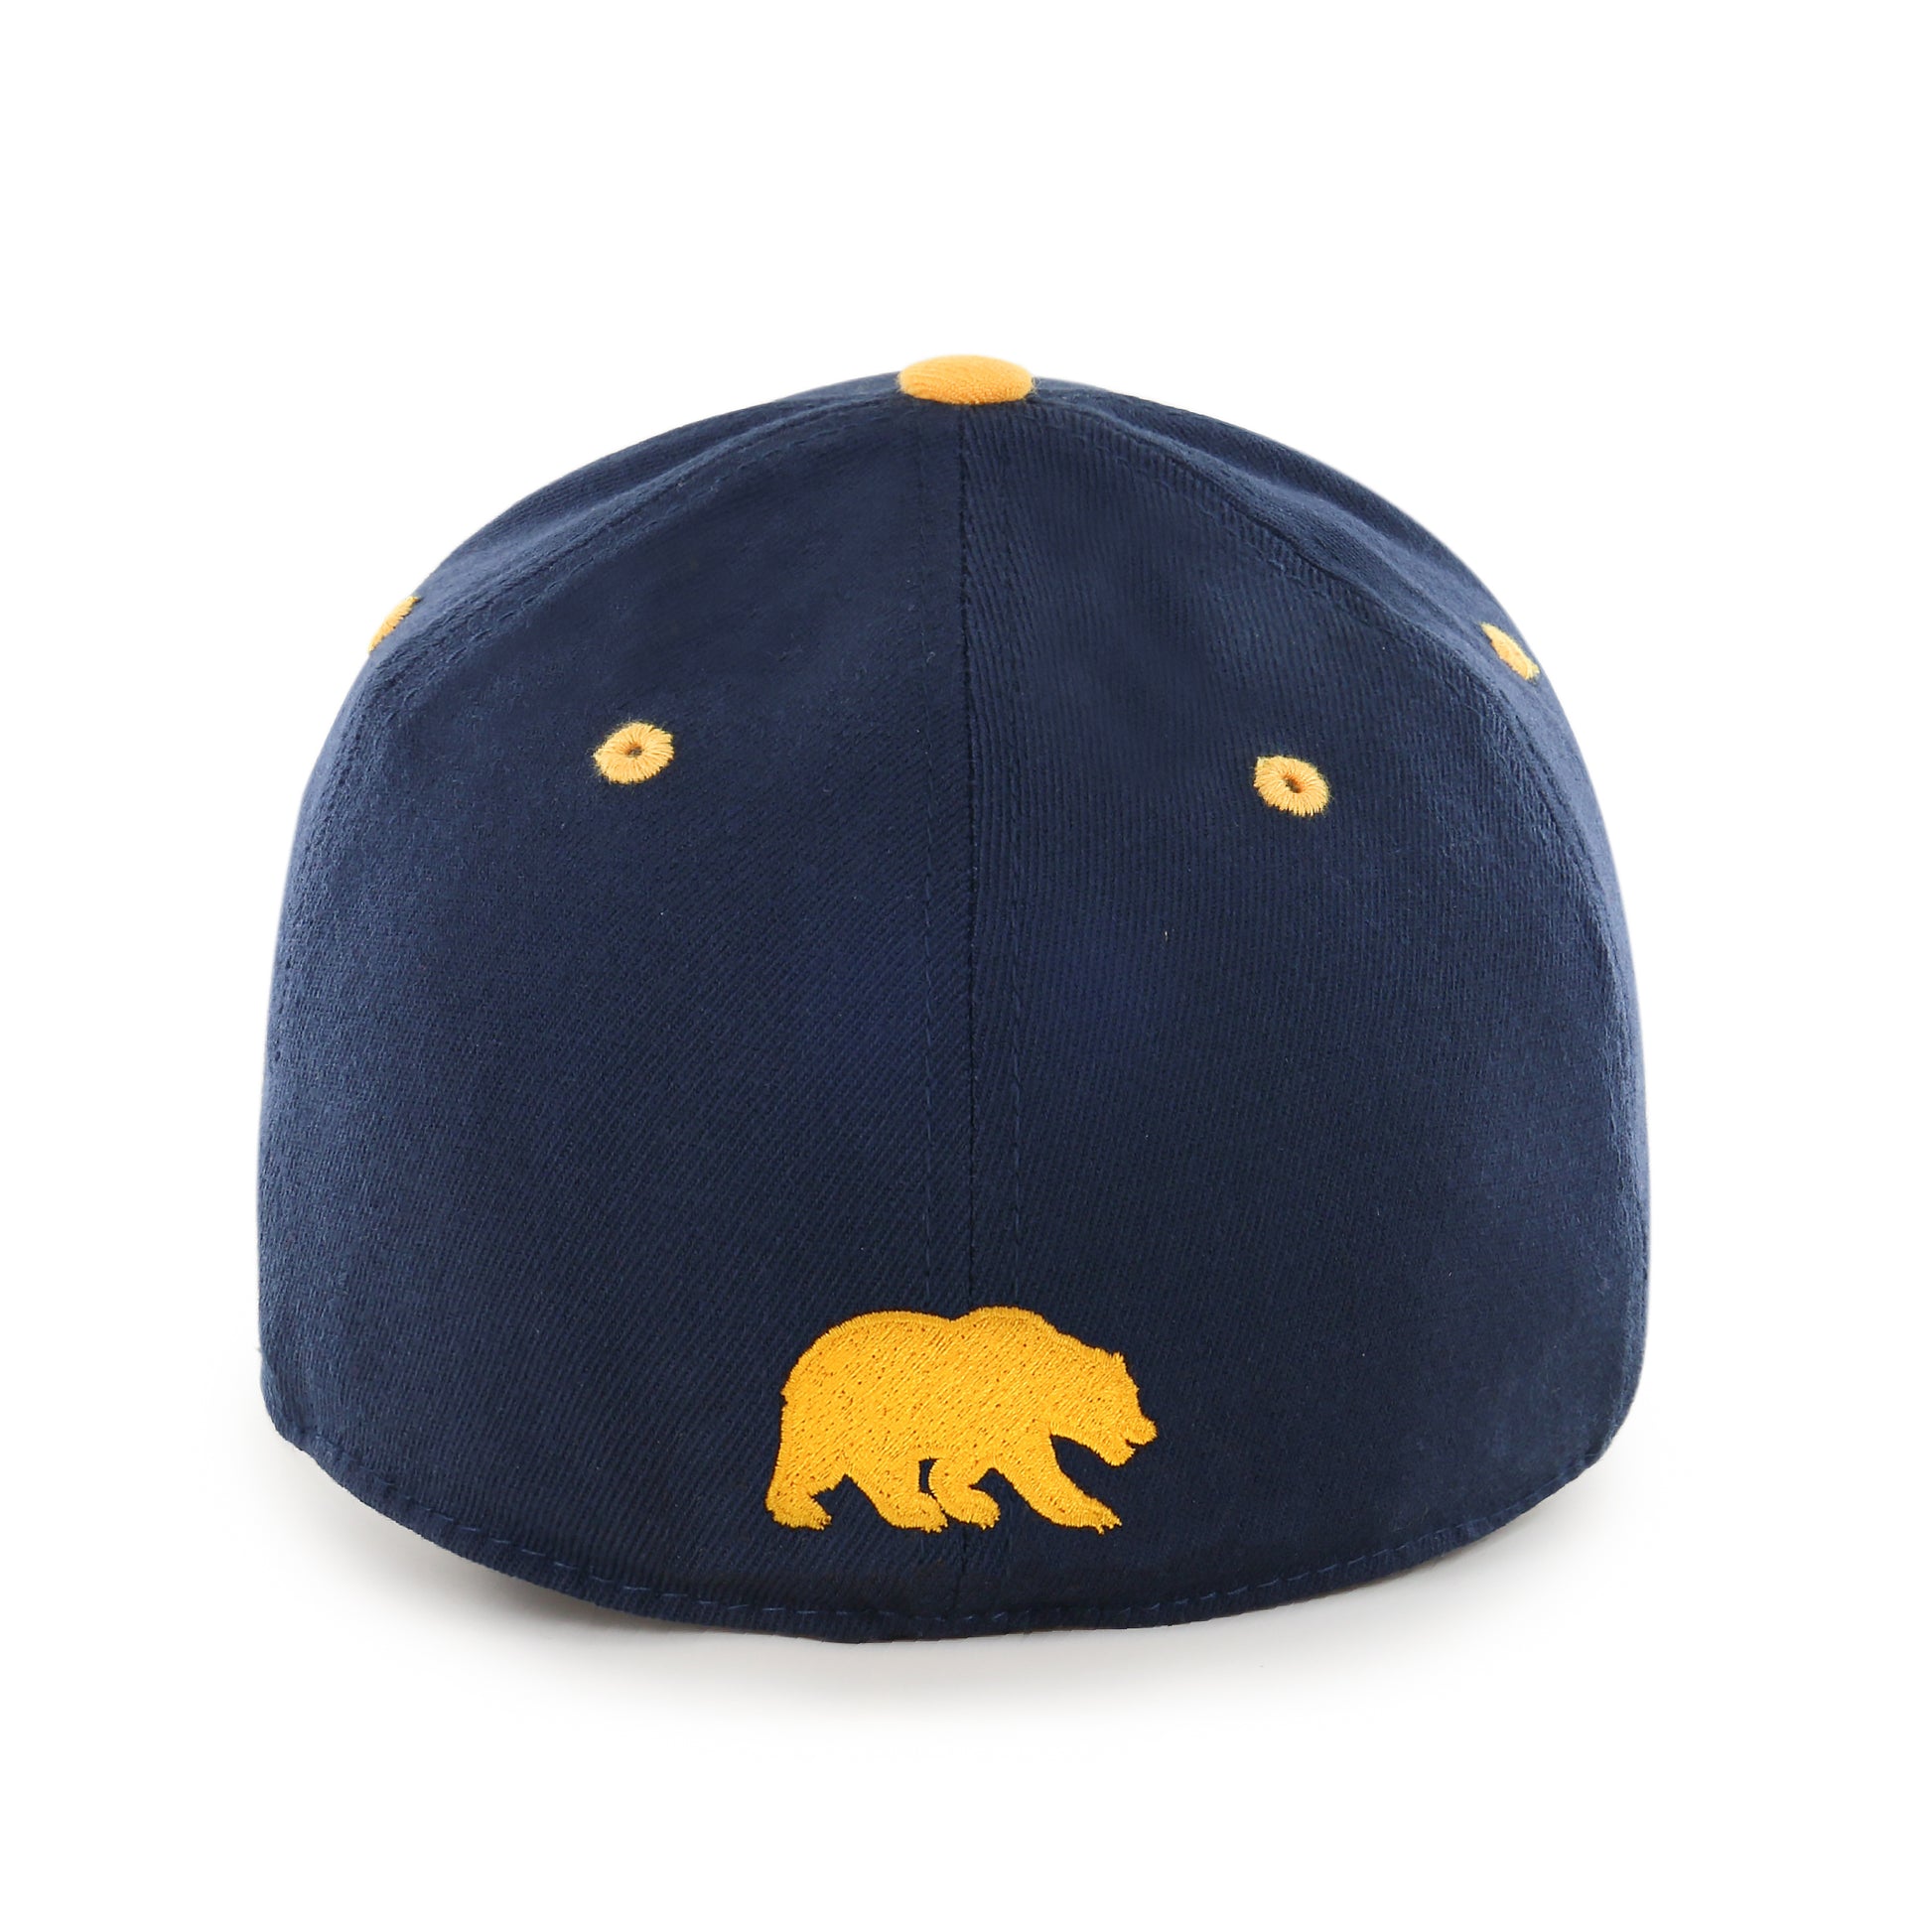 U.C. Berkeley Cal embroidered flex fit contender wool blend hat-Navy-Shop College Wear